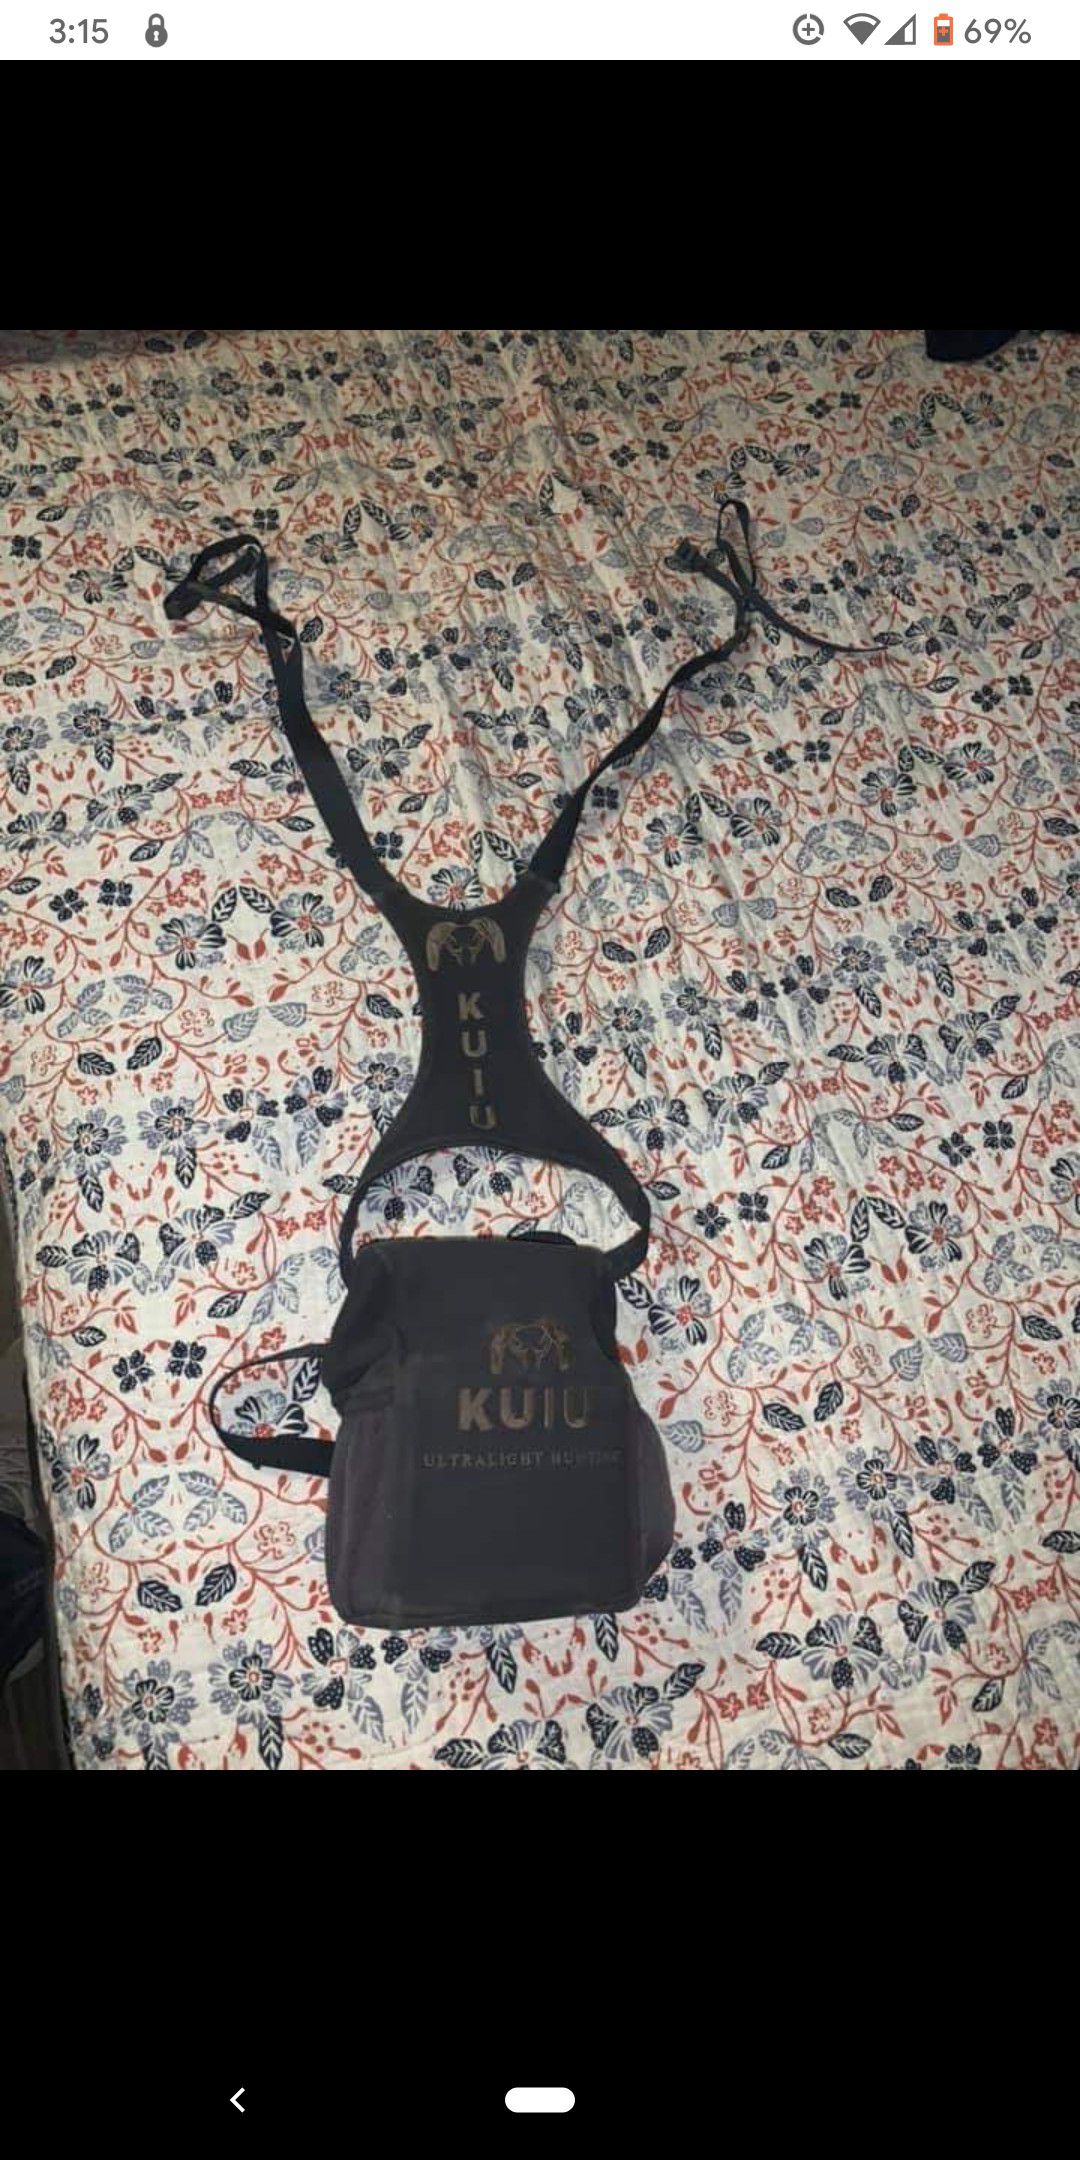 Kuiu Bino harness